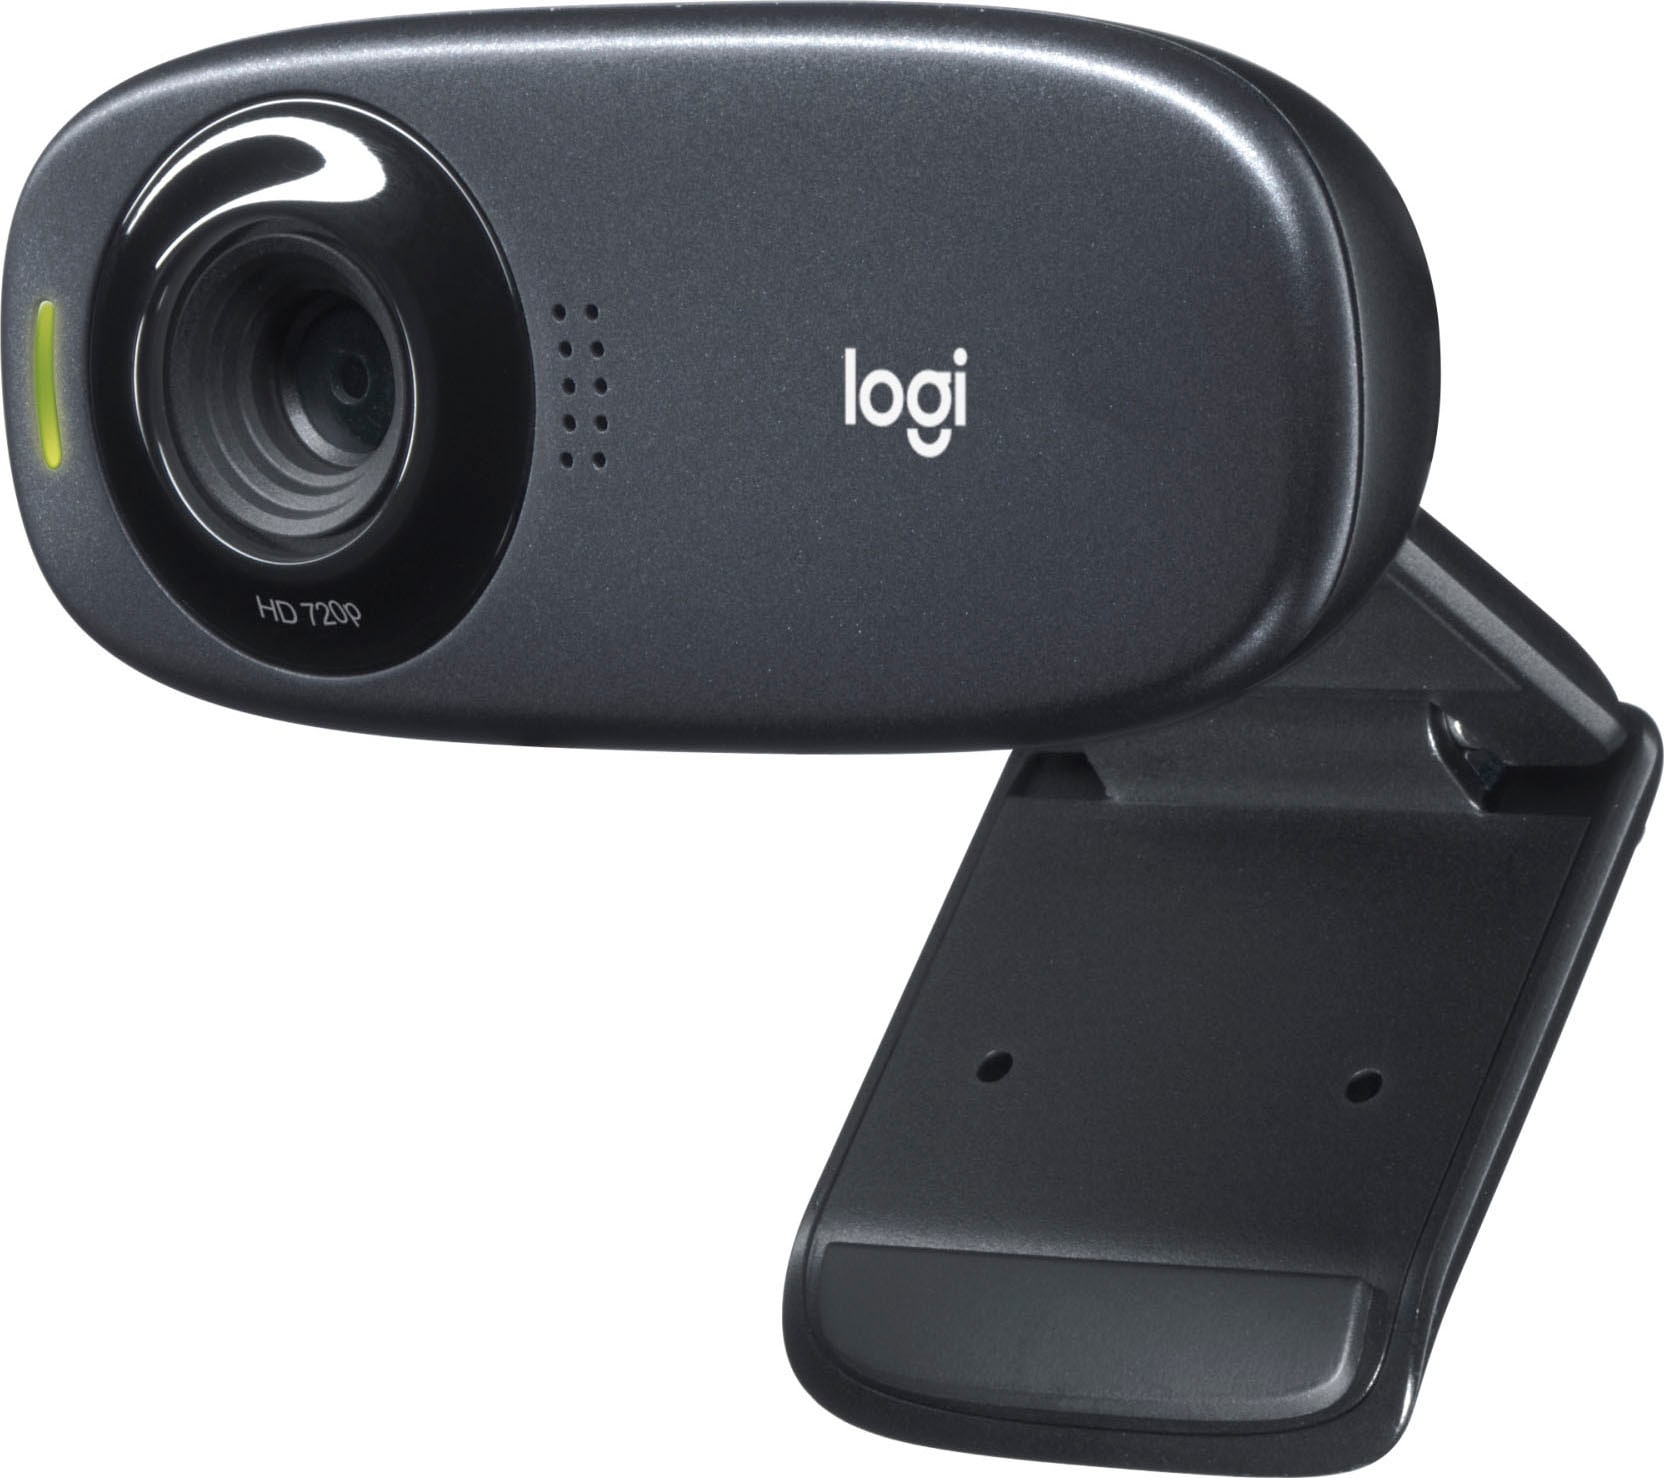 Webcams ➥ jetzt kaufen später bezahlen | UNIVERSAL